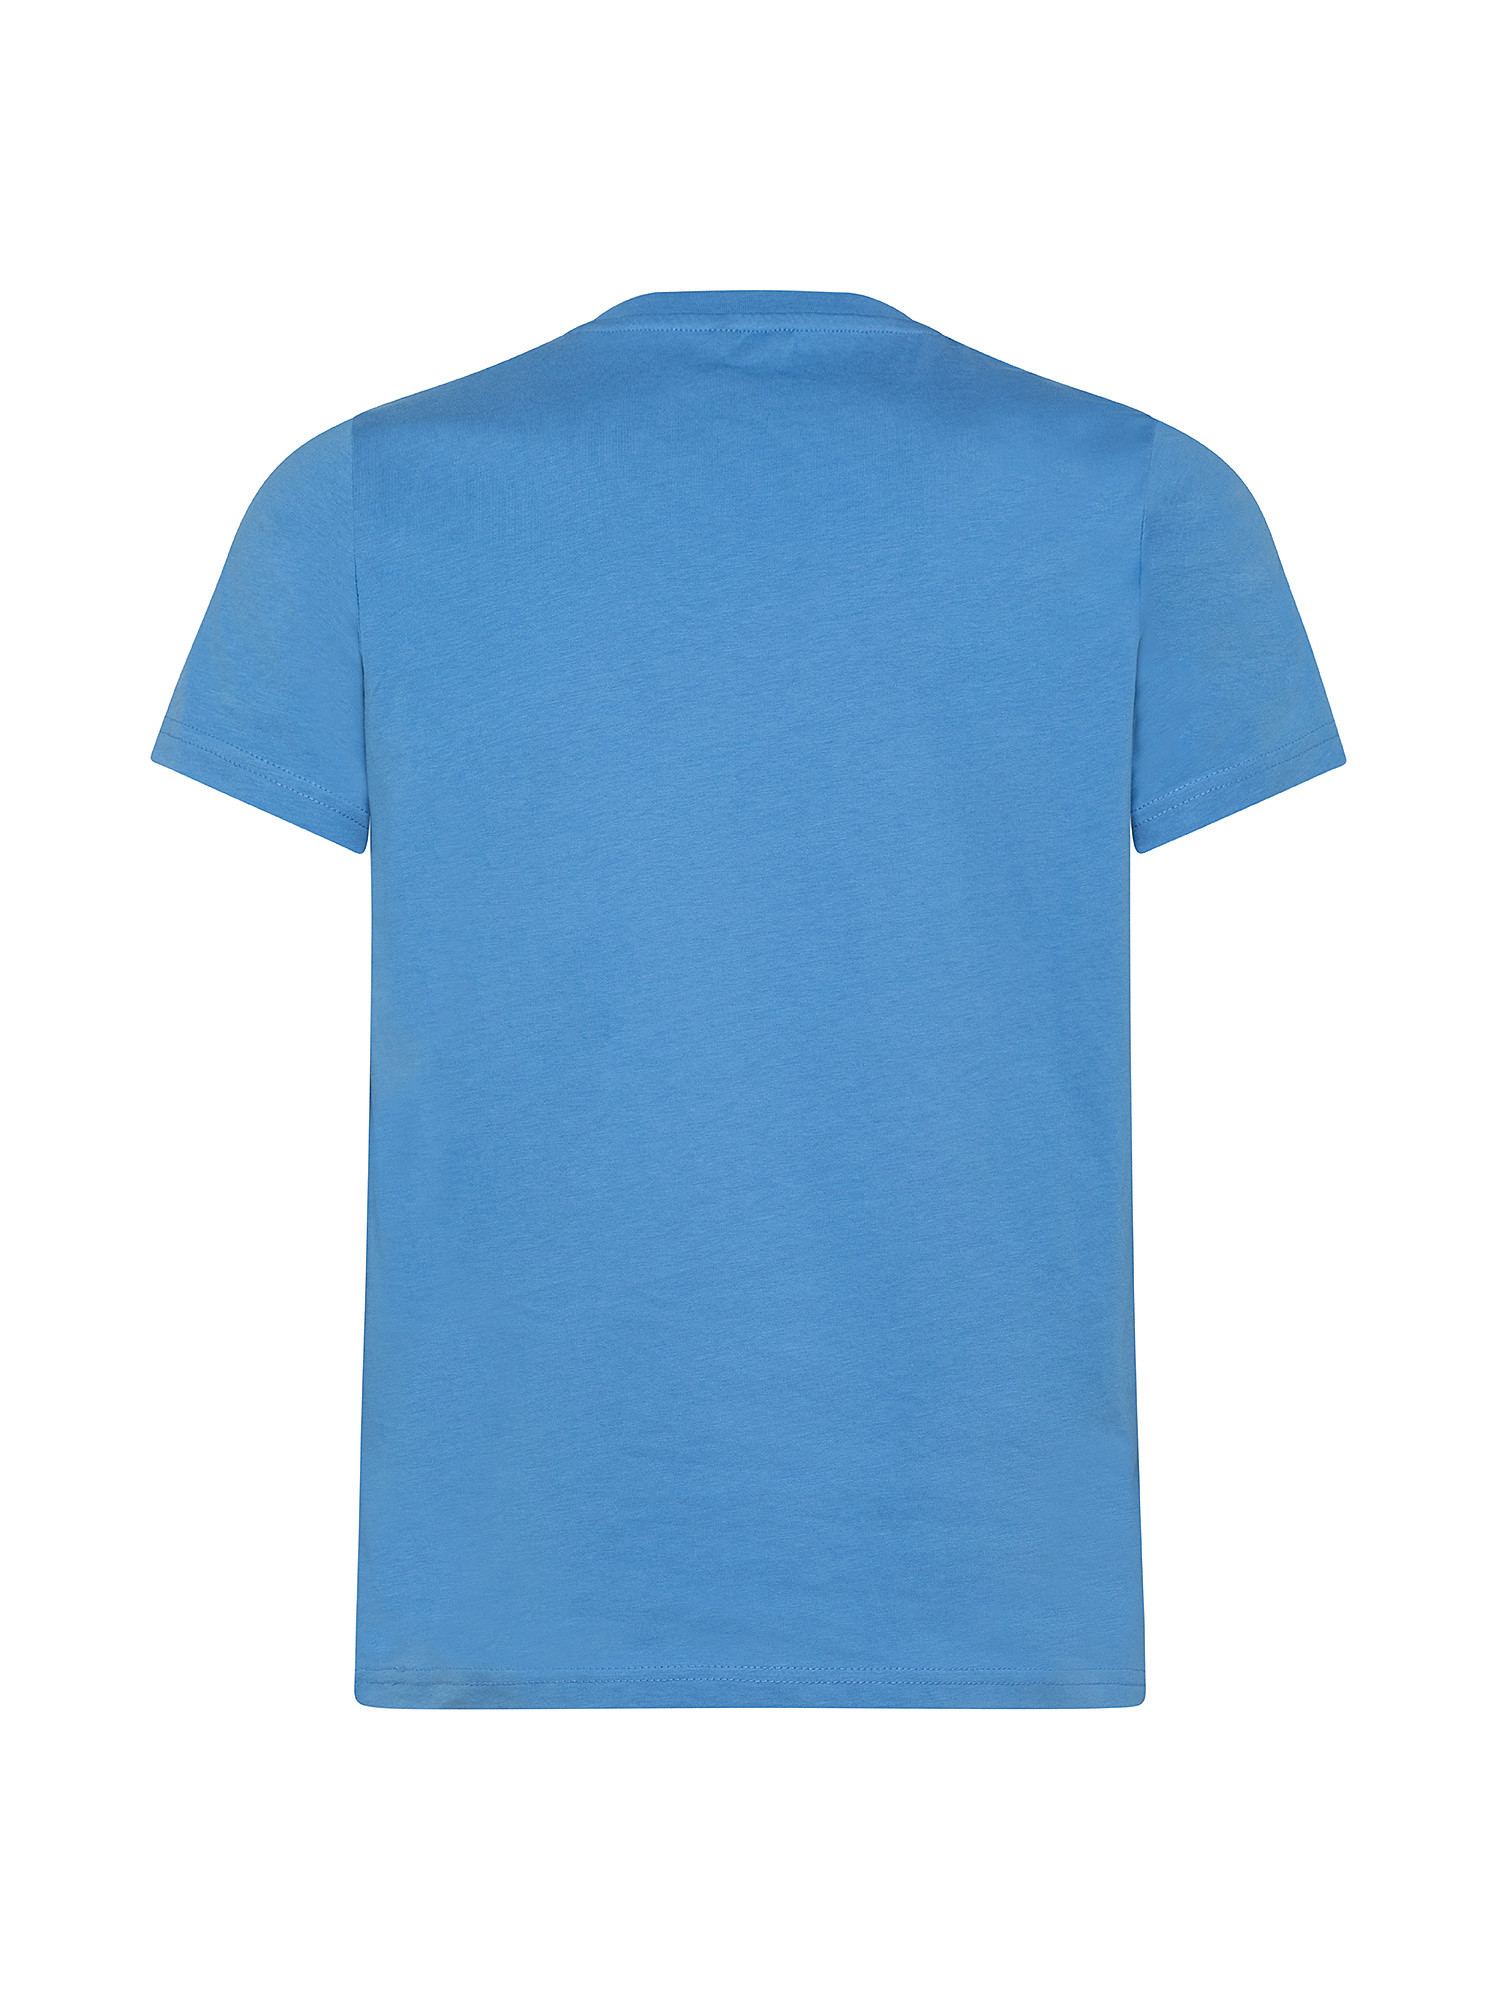 T-shirt slim fit, Azzurro, large image number 1